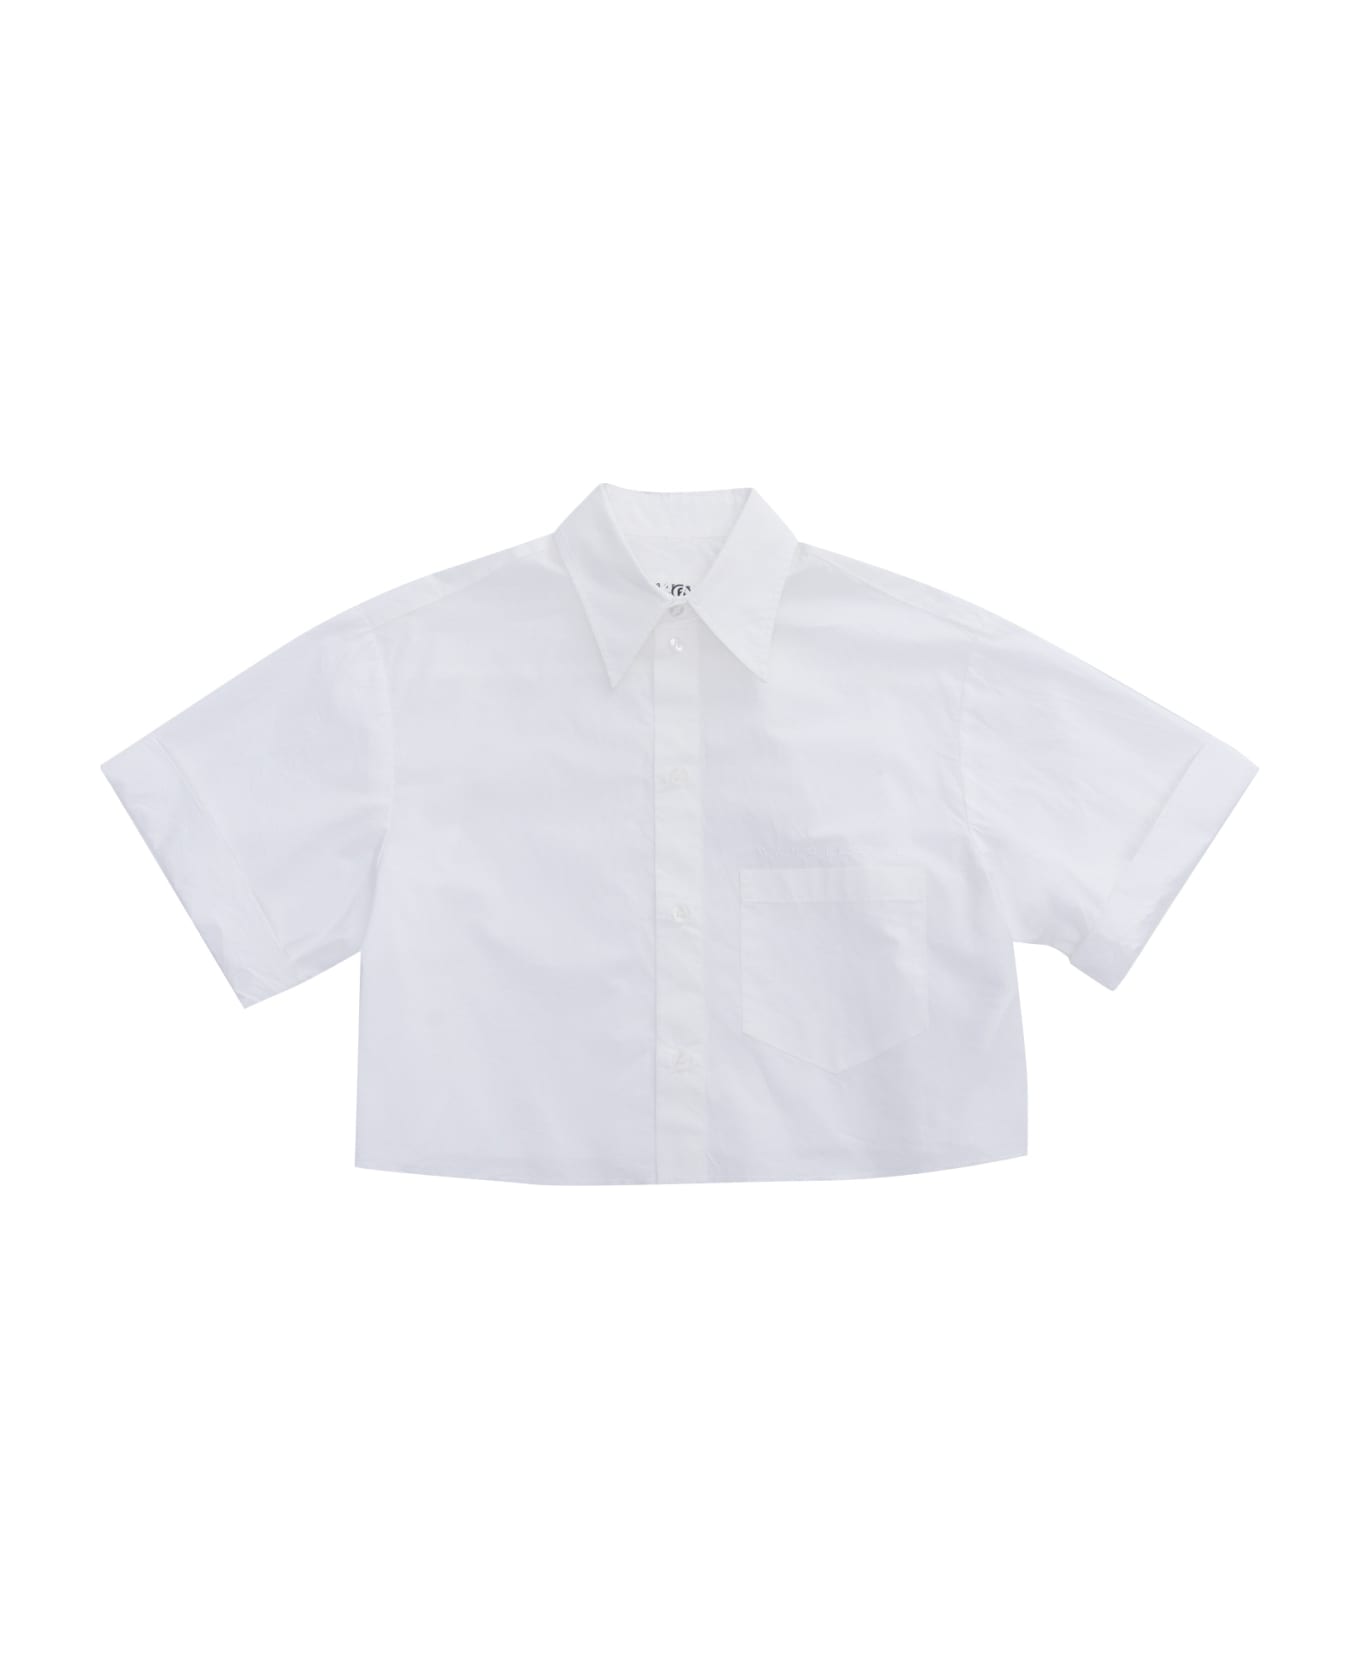 MM6 Maison Margiela White Cropped T-shirt - WHITE